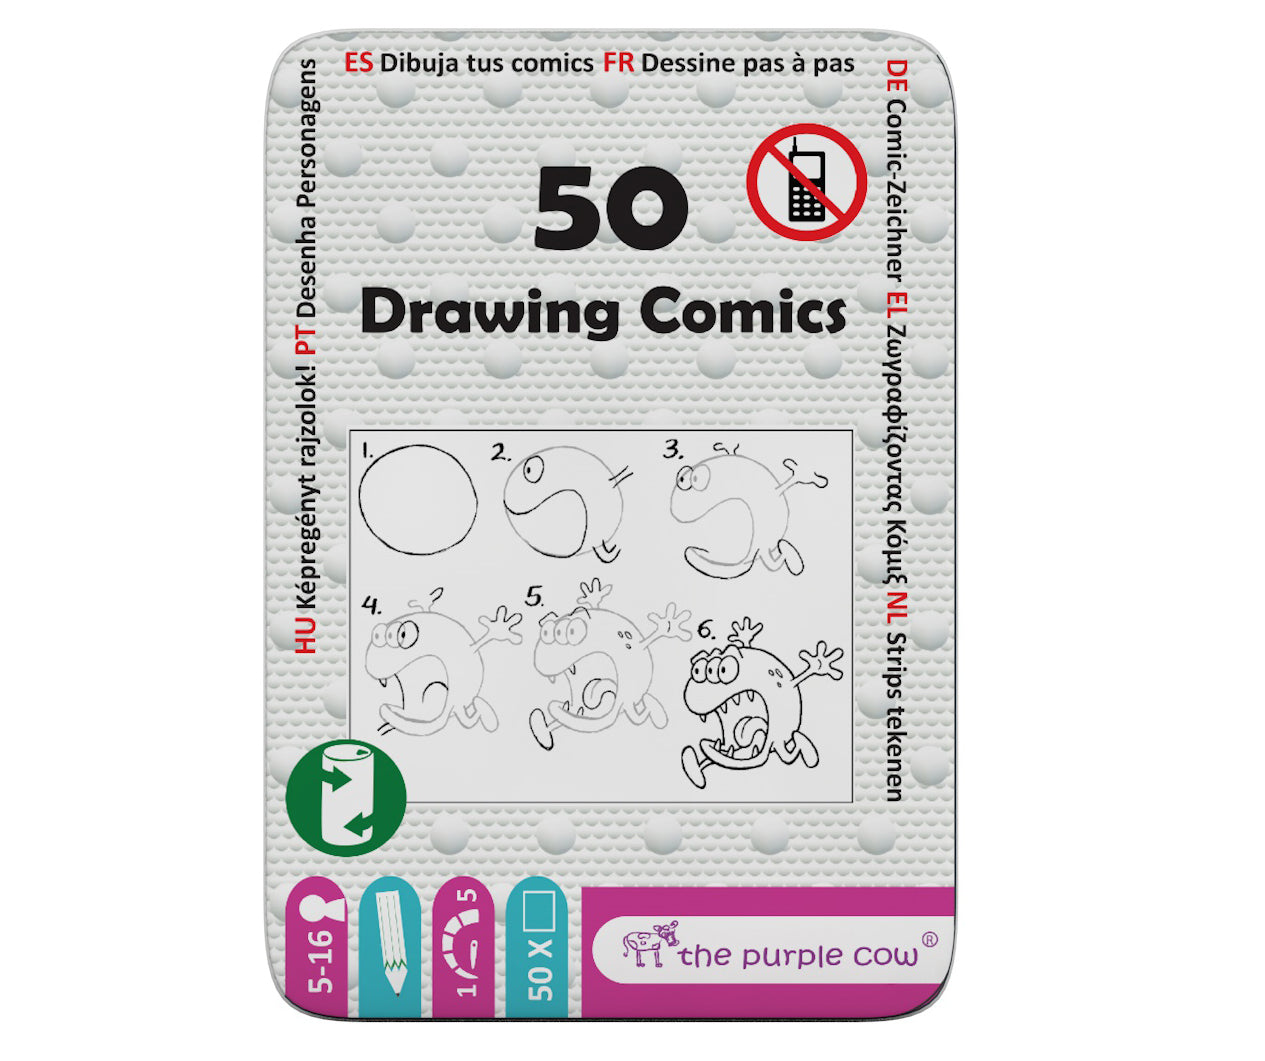 Fifty Drawing Comics